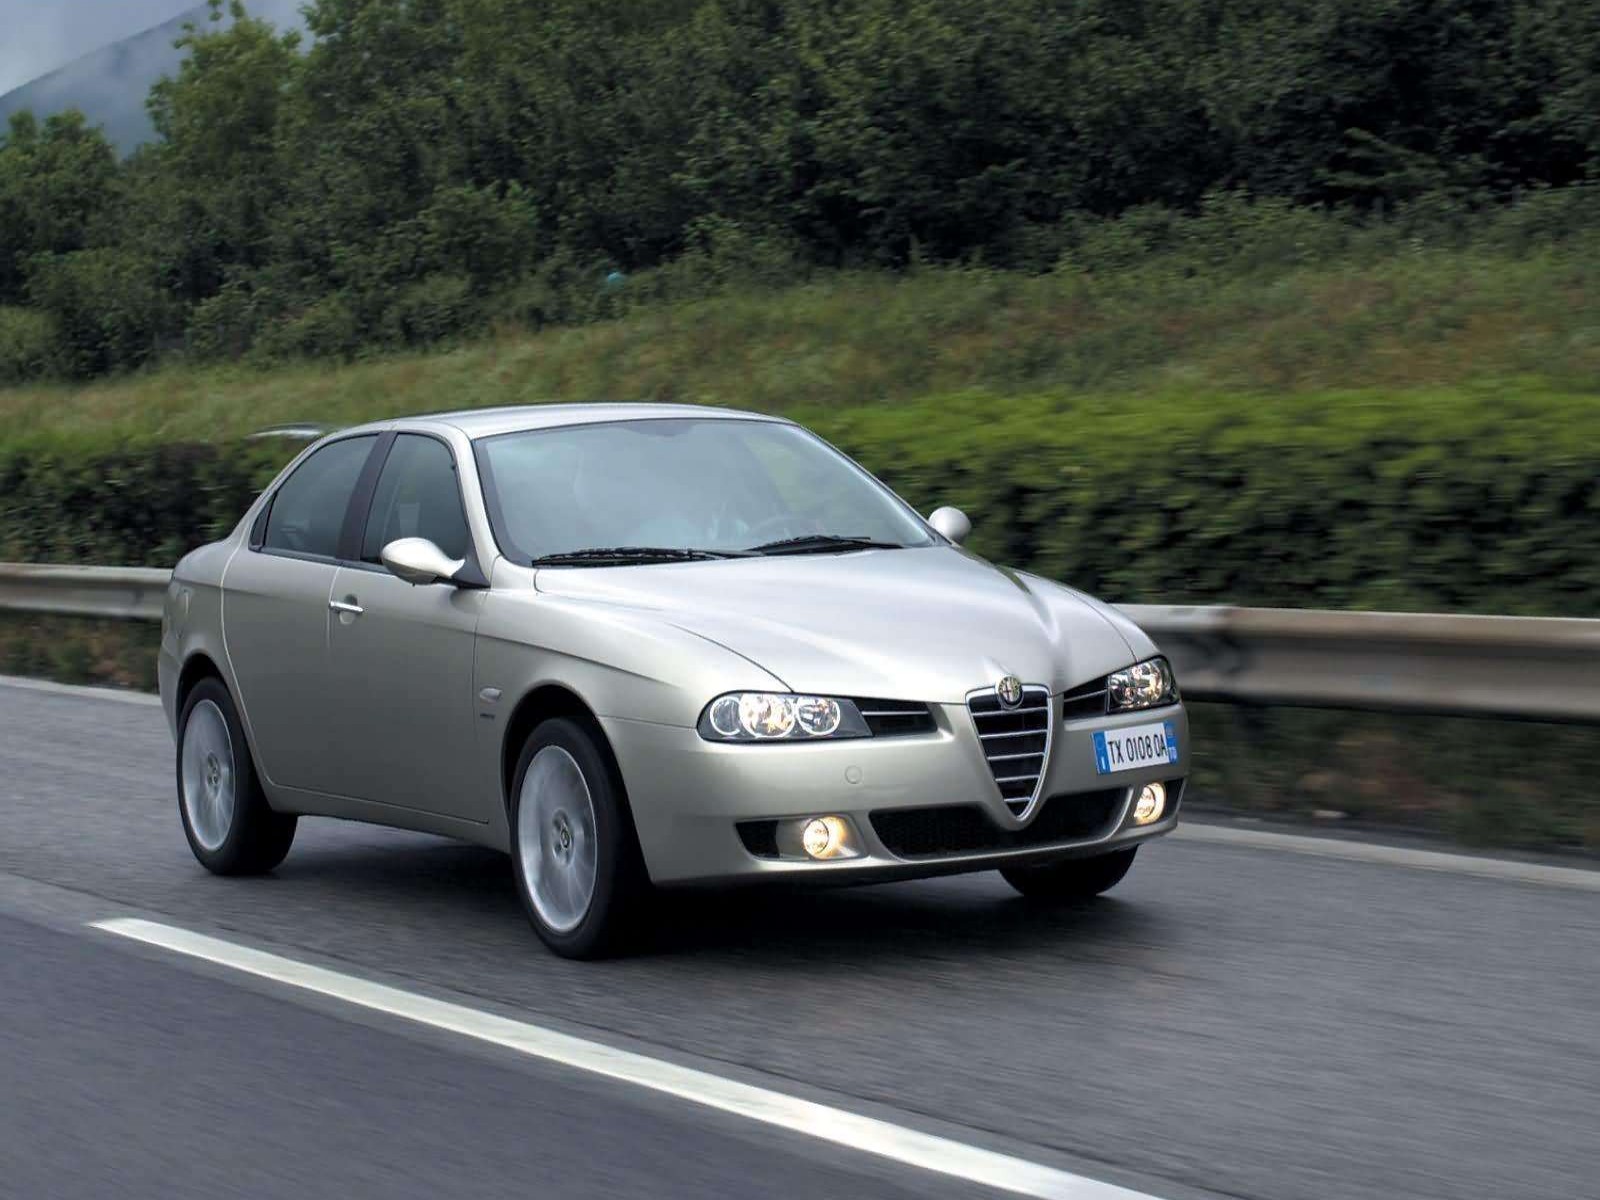 Alfa-Romeo 156  2.5 i V6 24V 192 KM - dane techniczne, wymiary, spalanie i opinie